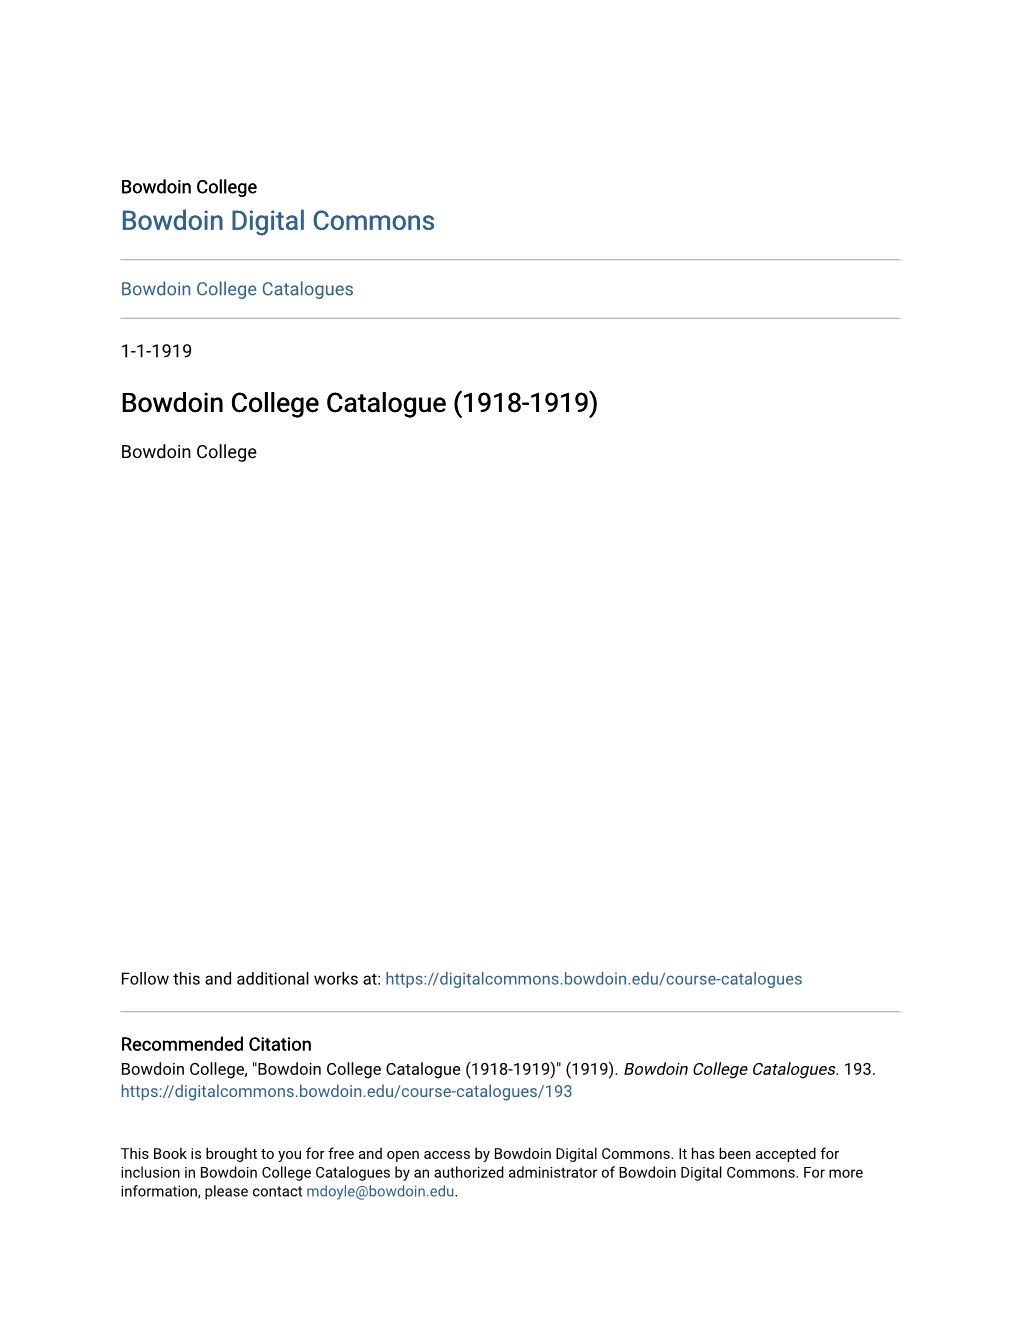 Bowdoin College Catalogue (1918-1919)